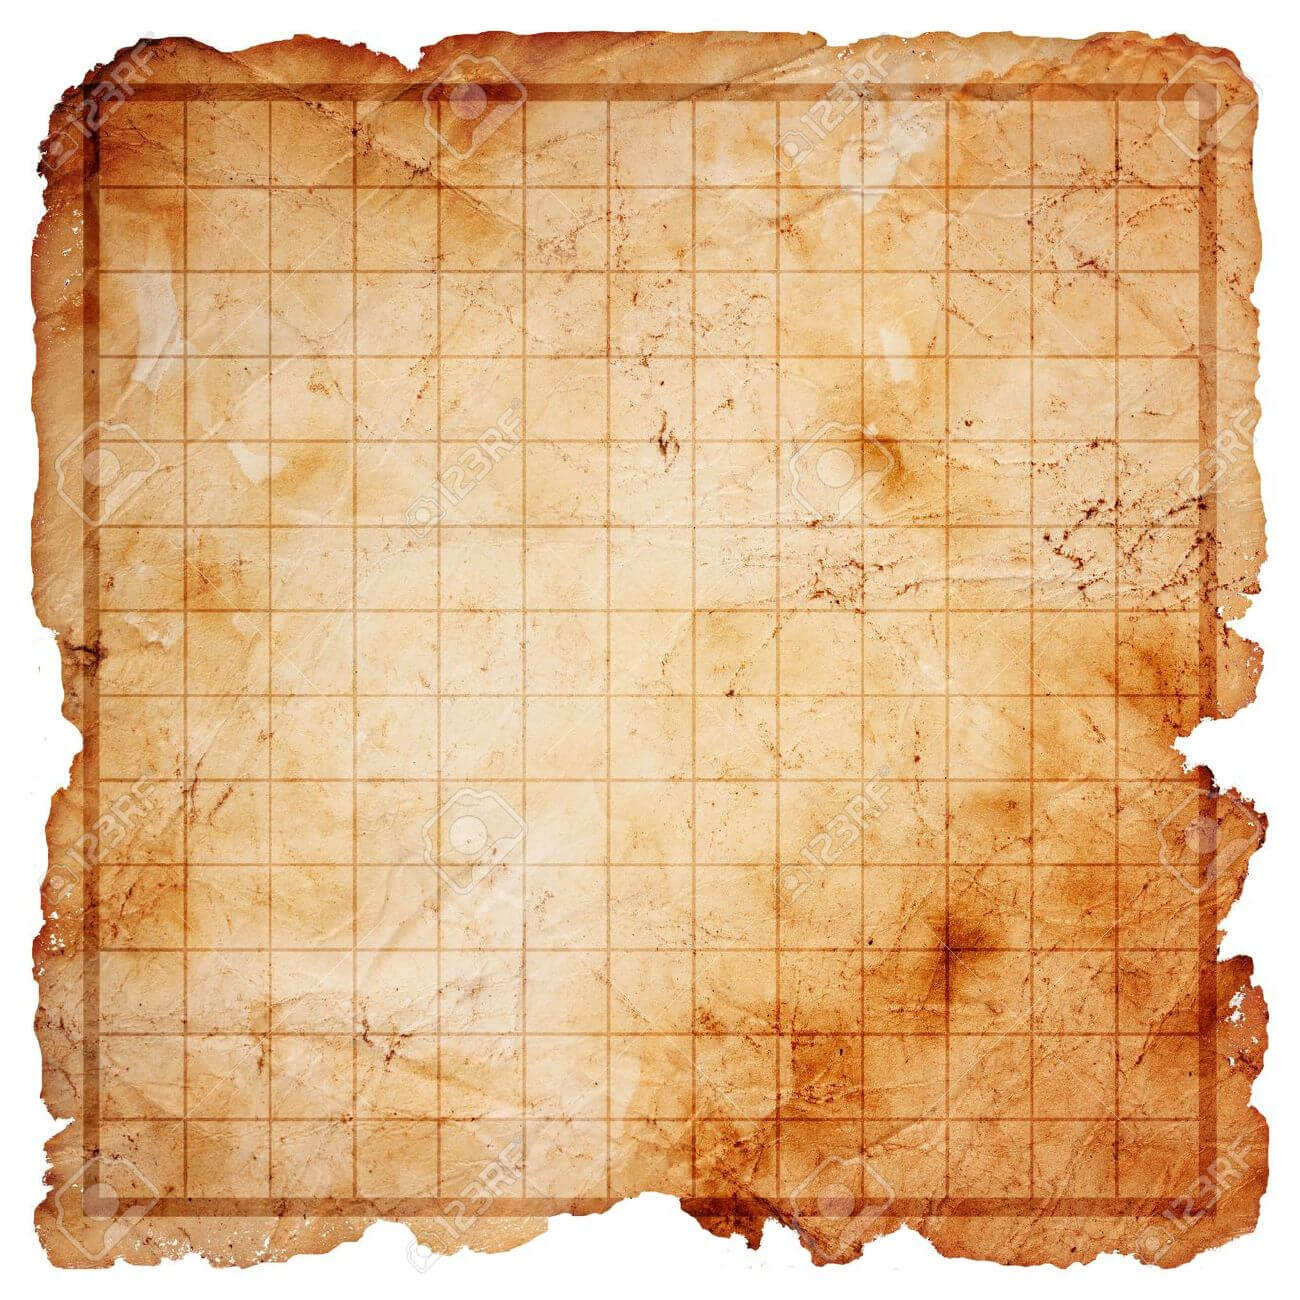 Blank Pirate Treasure Map Regarding Blank Pirate Map Template